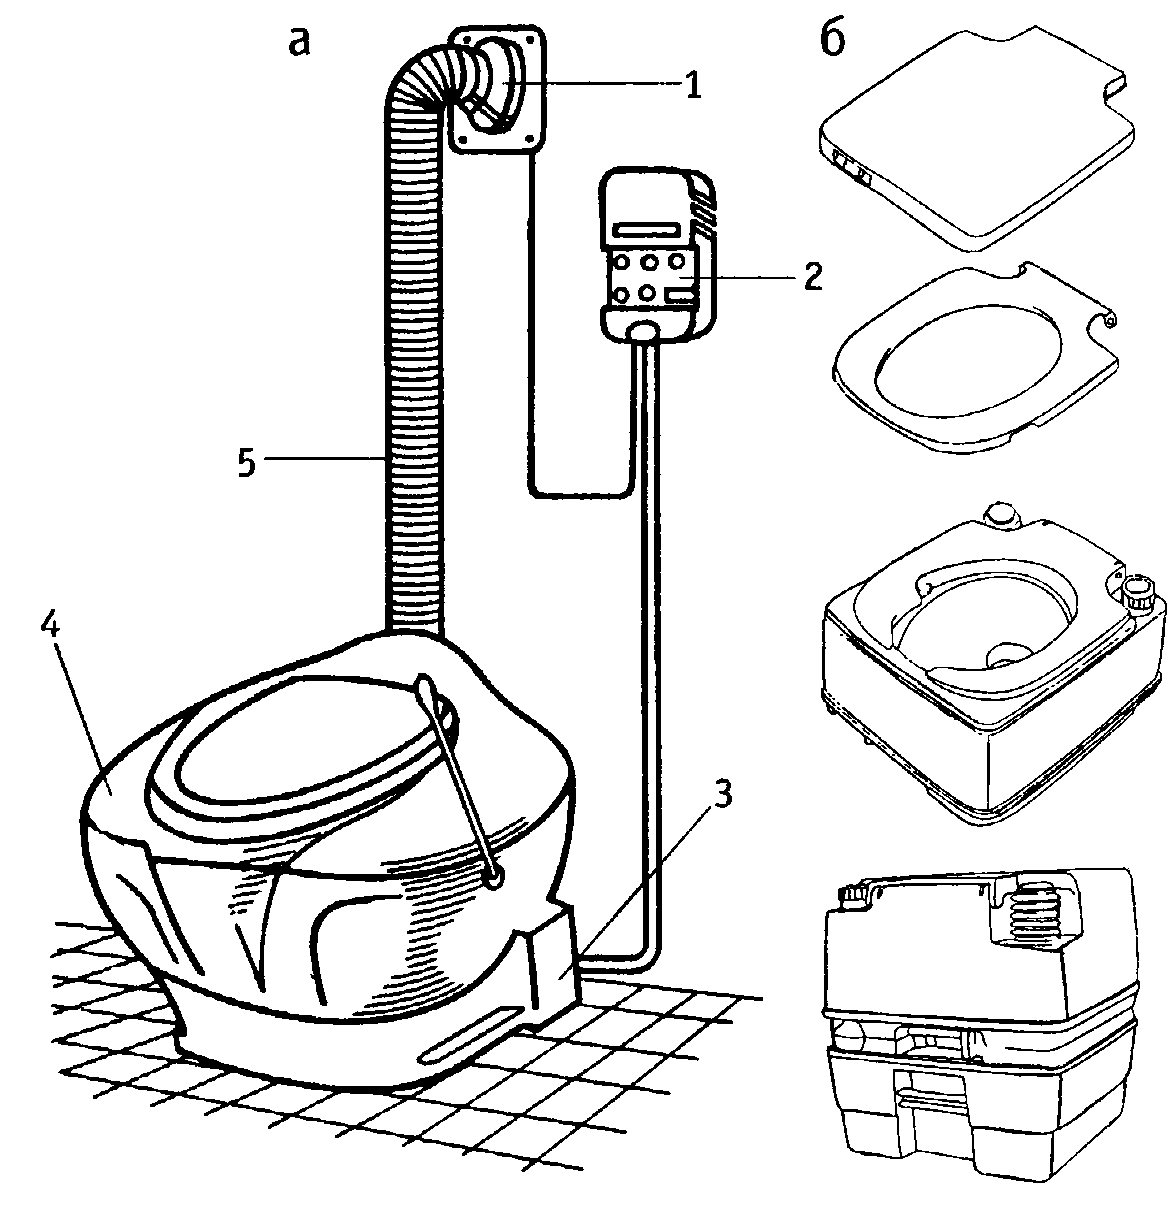 Торфяной туалет для дачи своими руками: компостирующий биотуалет, установка